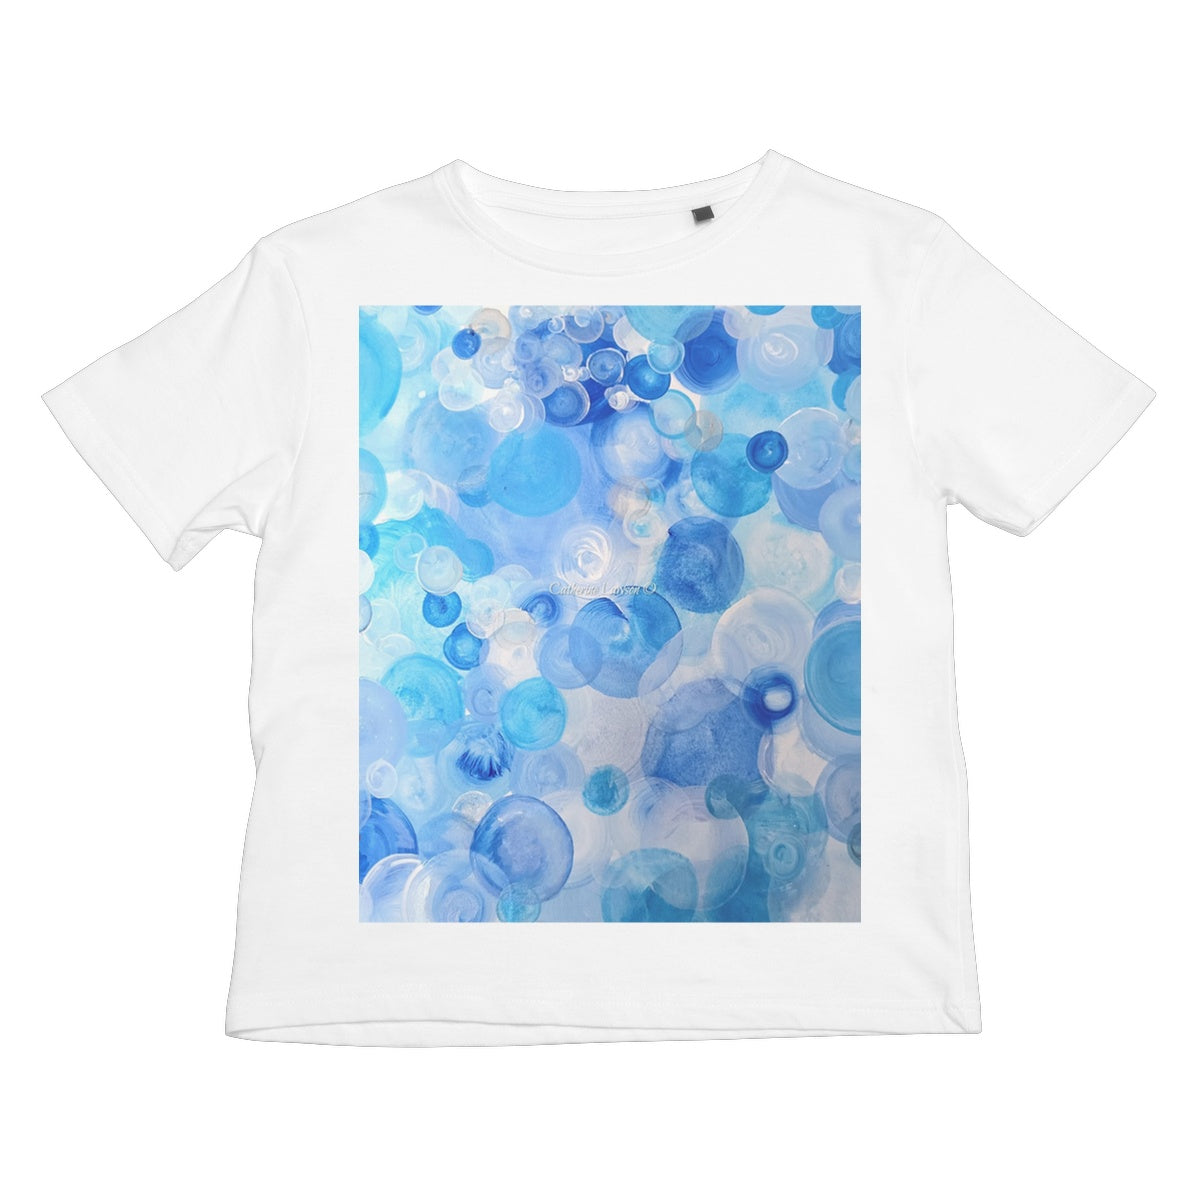 Blue Circles Kids T-Shirt